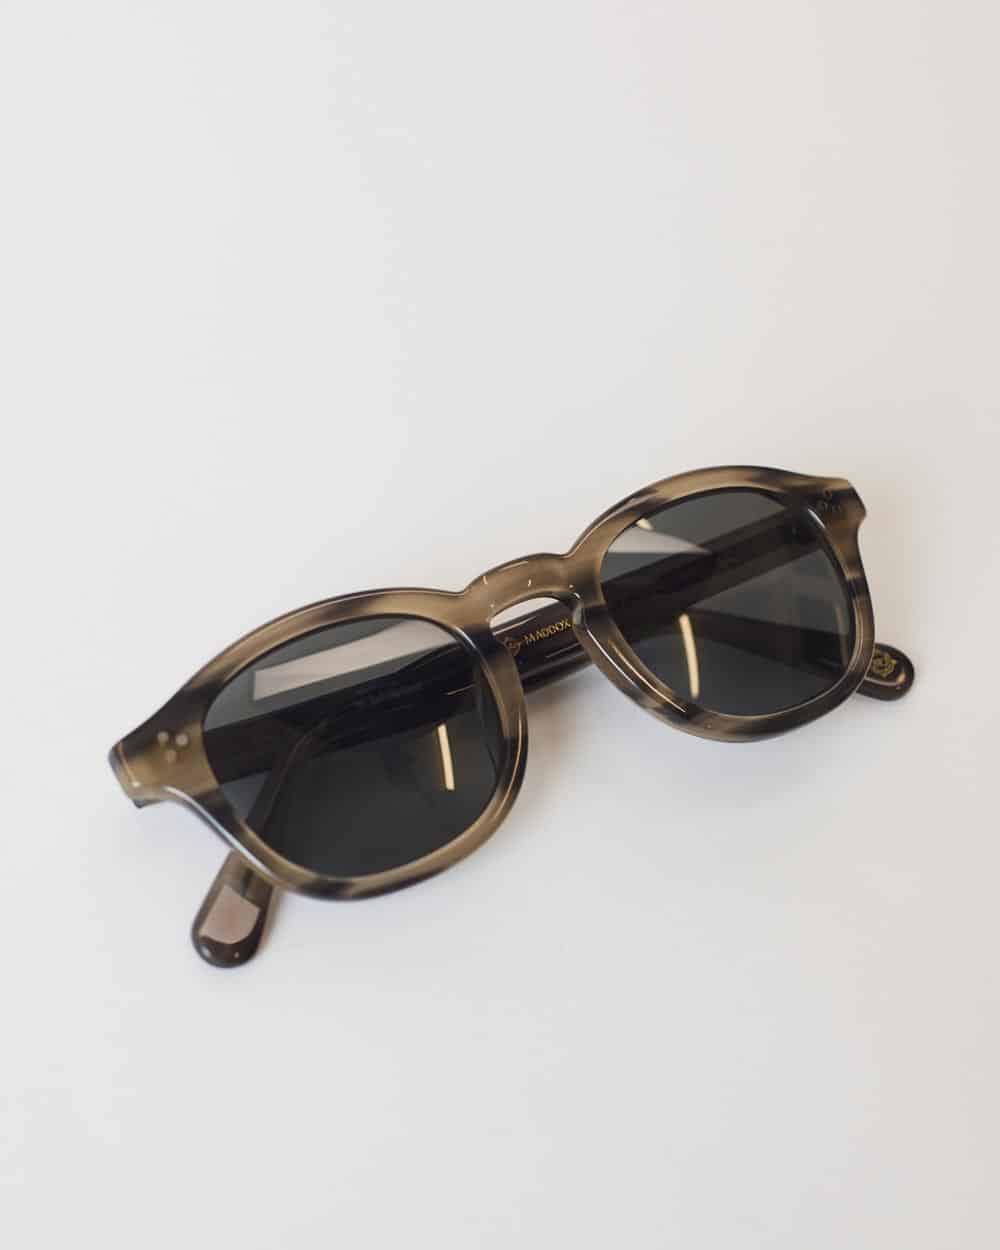 Red Rabbit Trading Co. x Maddox Optical Tortoise Shell Sunglasses